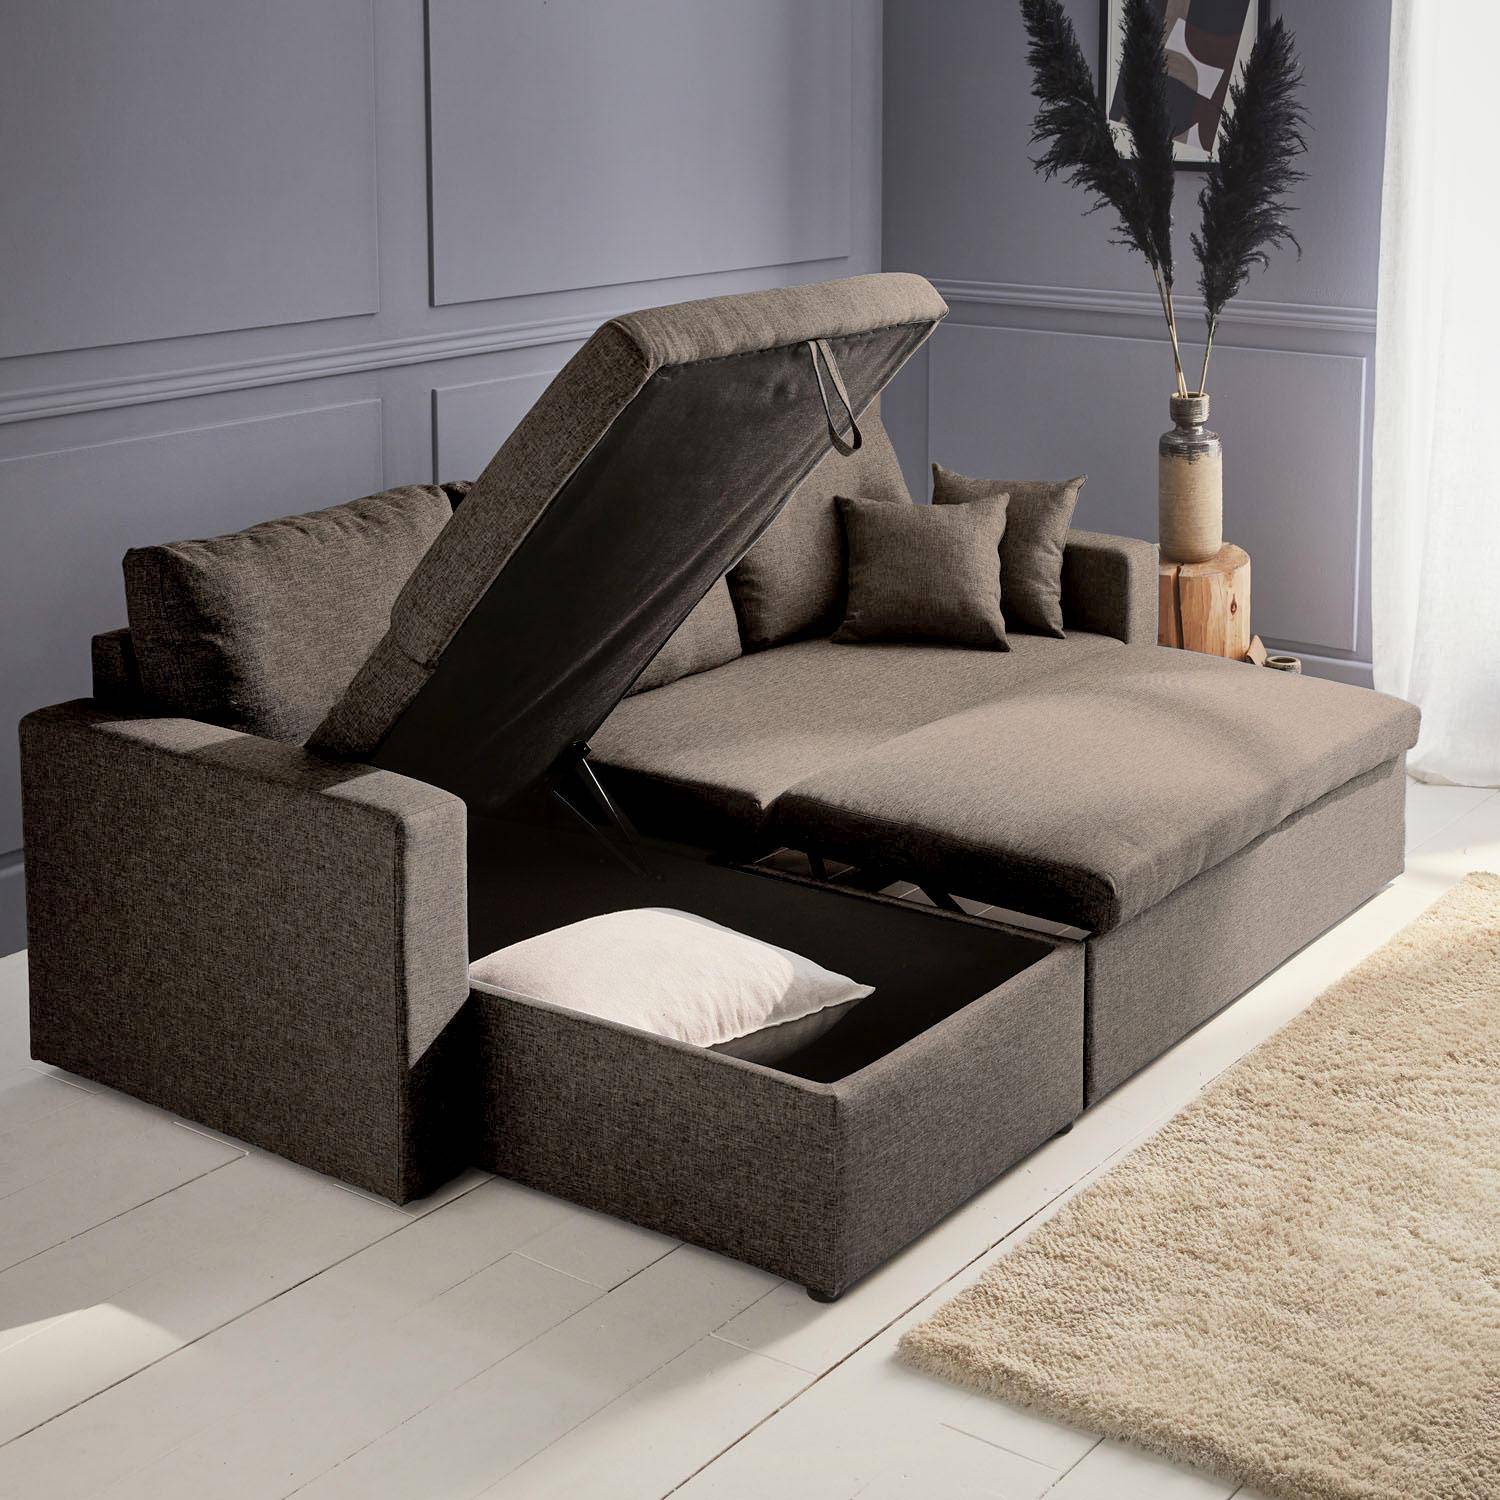 3-seater reversible brown corner sofa bed with storage box, brown, L219xD81xH68cm, IDA,sweeek,Photo4